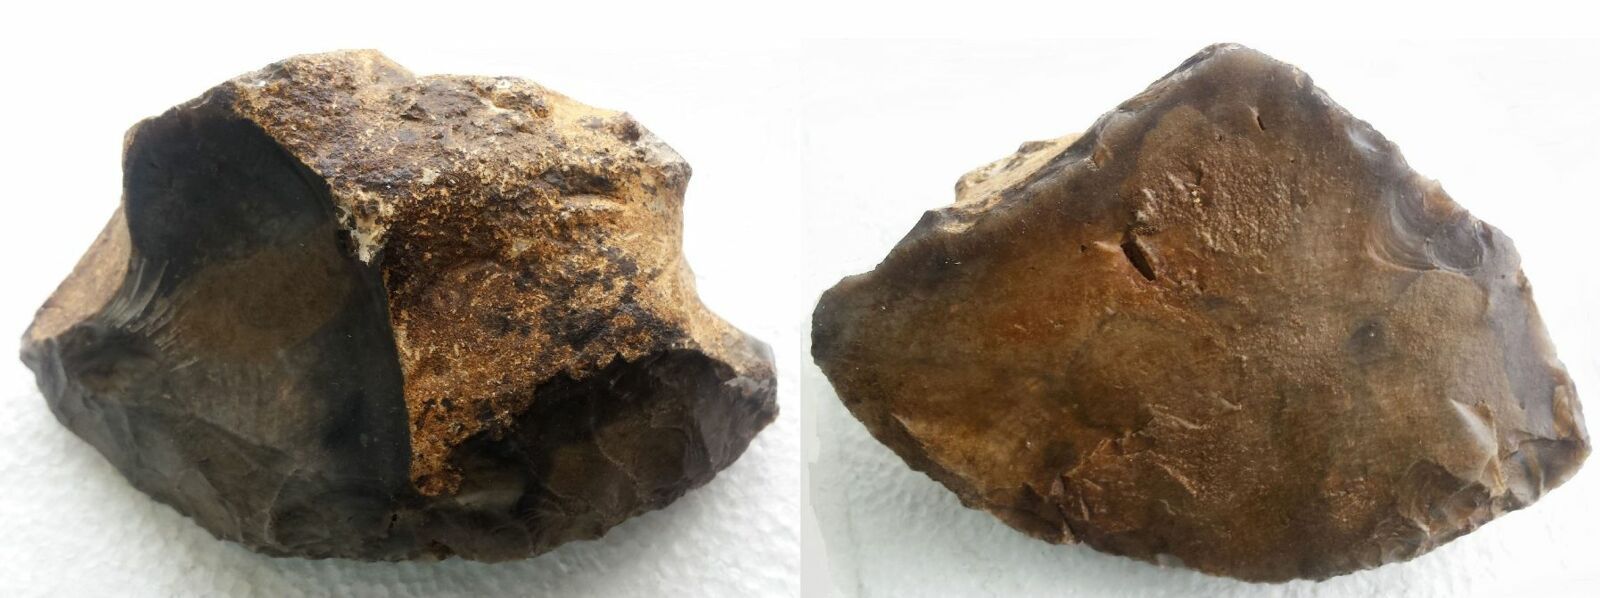 racloir grattoir moustérien néandertal scraper paleolithic nenaderthal mousterian